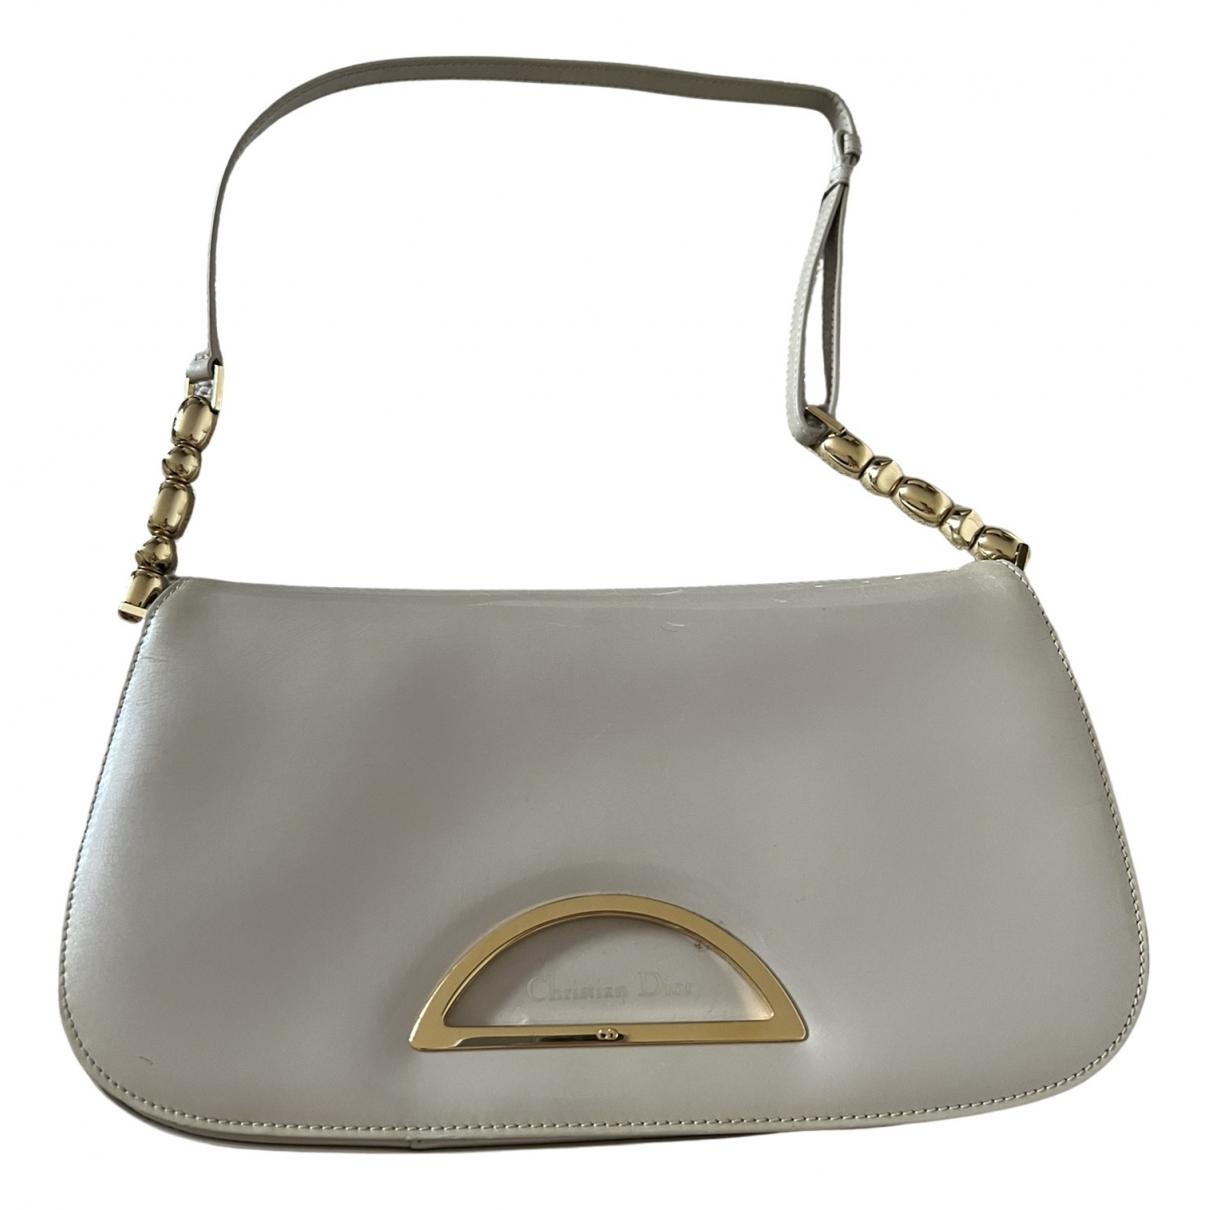 Malice patent leather handbag Dior